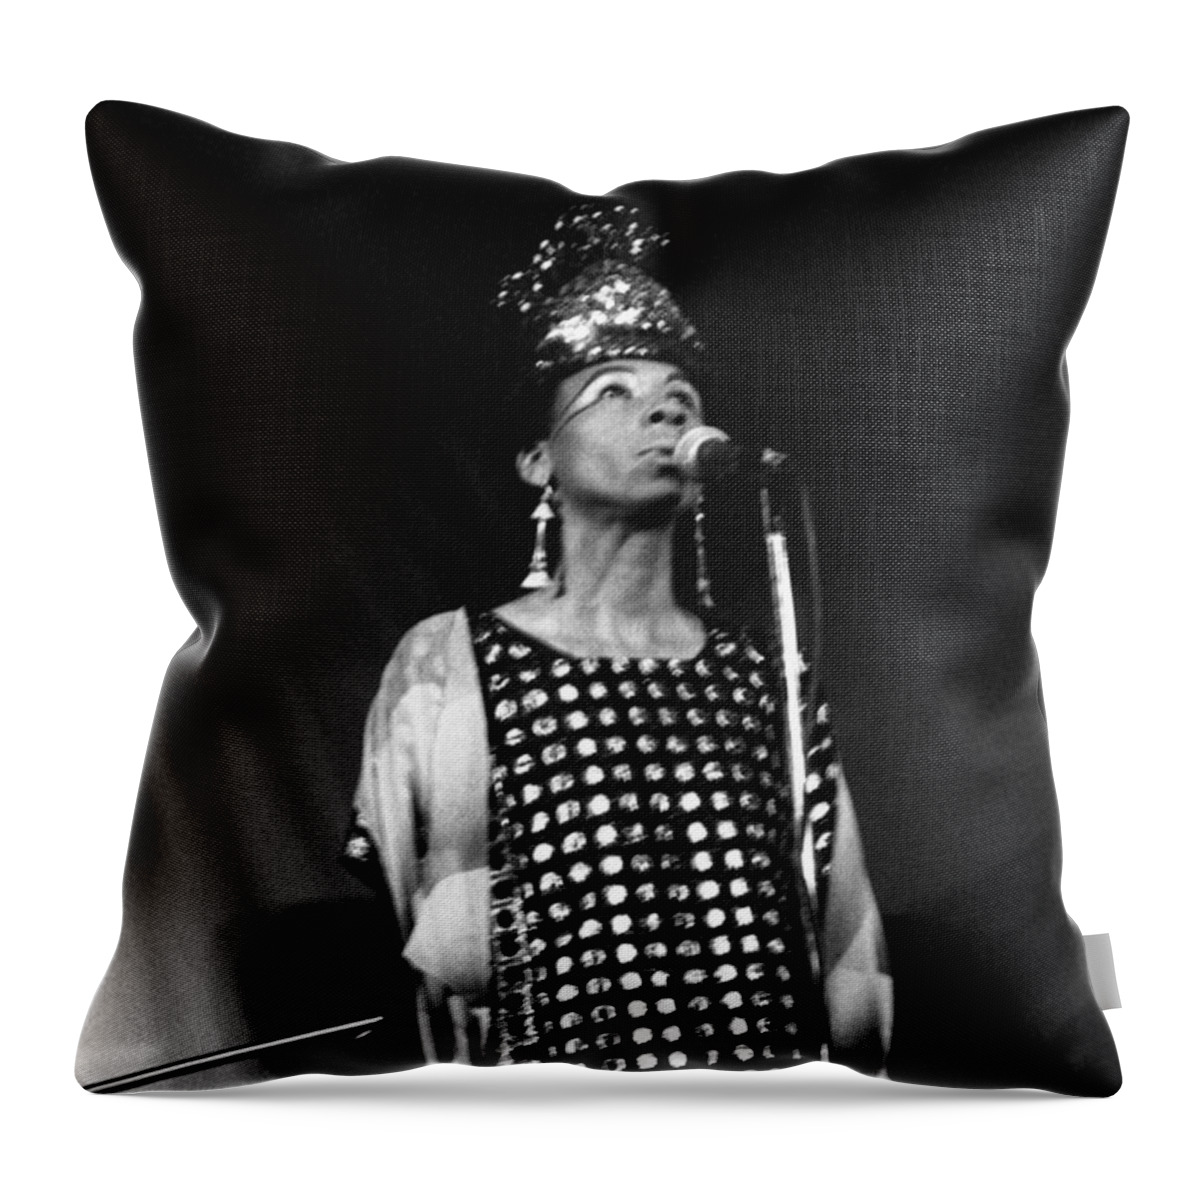 Sun Ra Arkestra Throw Pillow featuring the photograph June Tyson Sings by Lee Santa